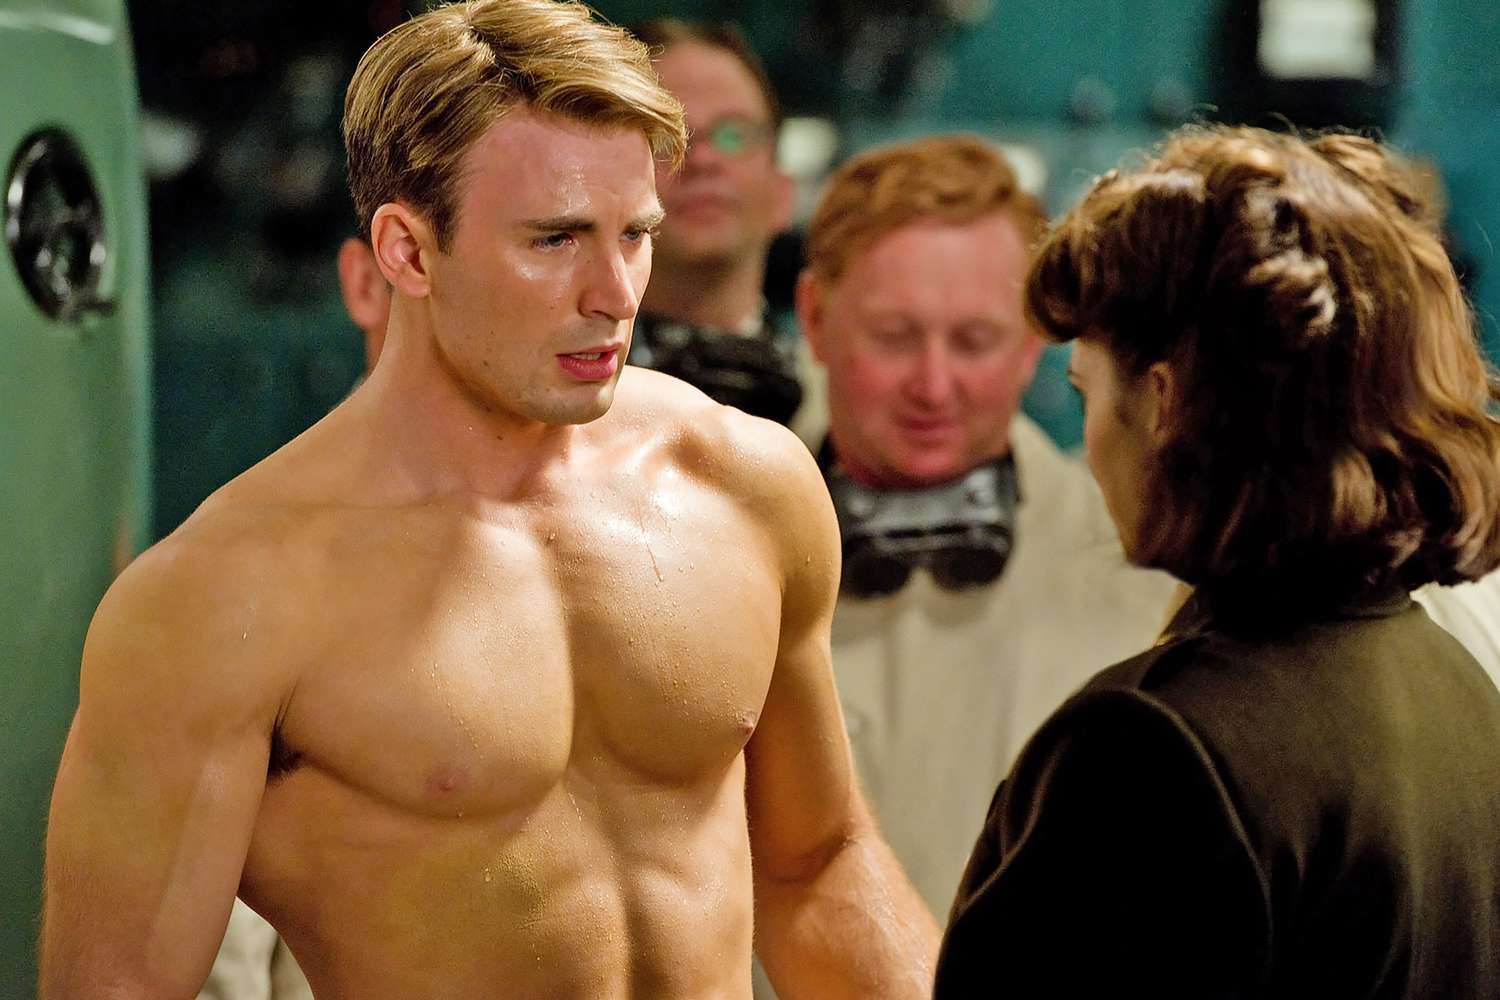 Mark Ruffalo didn't warn Chris Evans that 'She-Hulk' reveals Captain America's virginity status